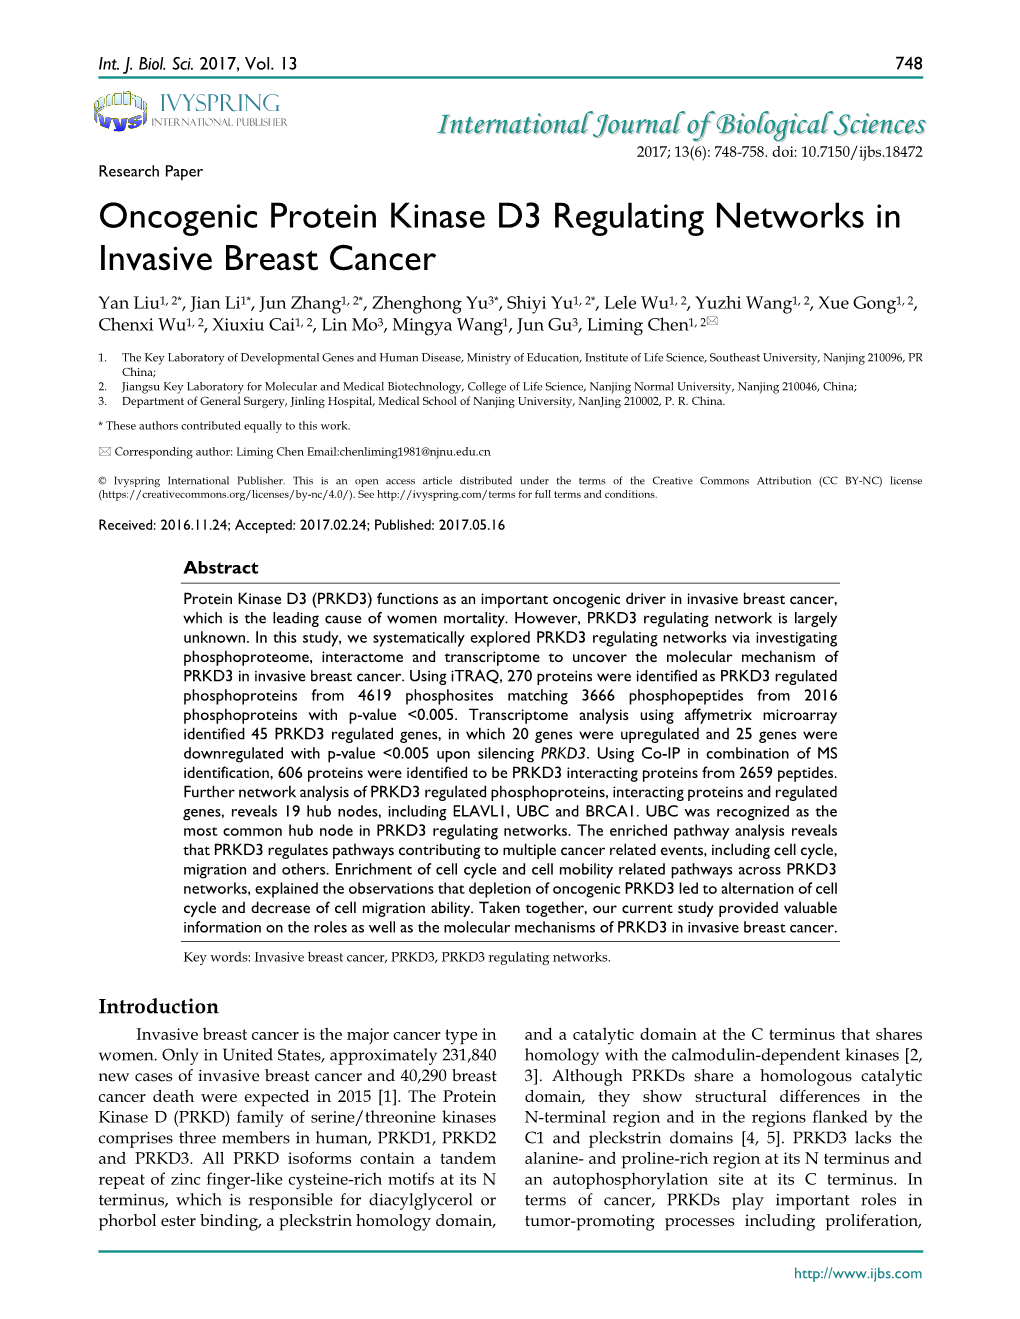 Oncogenic Protein Kinase D3 Regulating Networks in Invasive